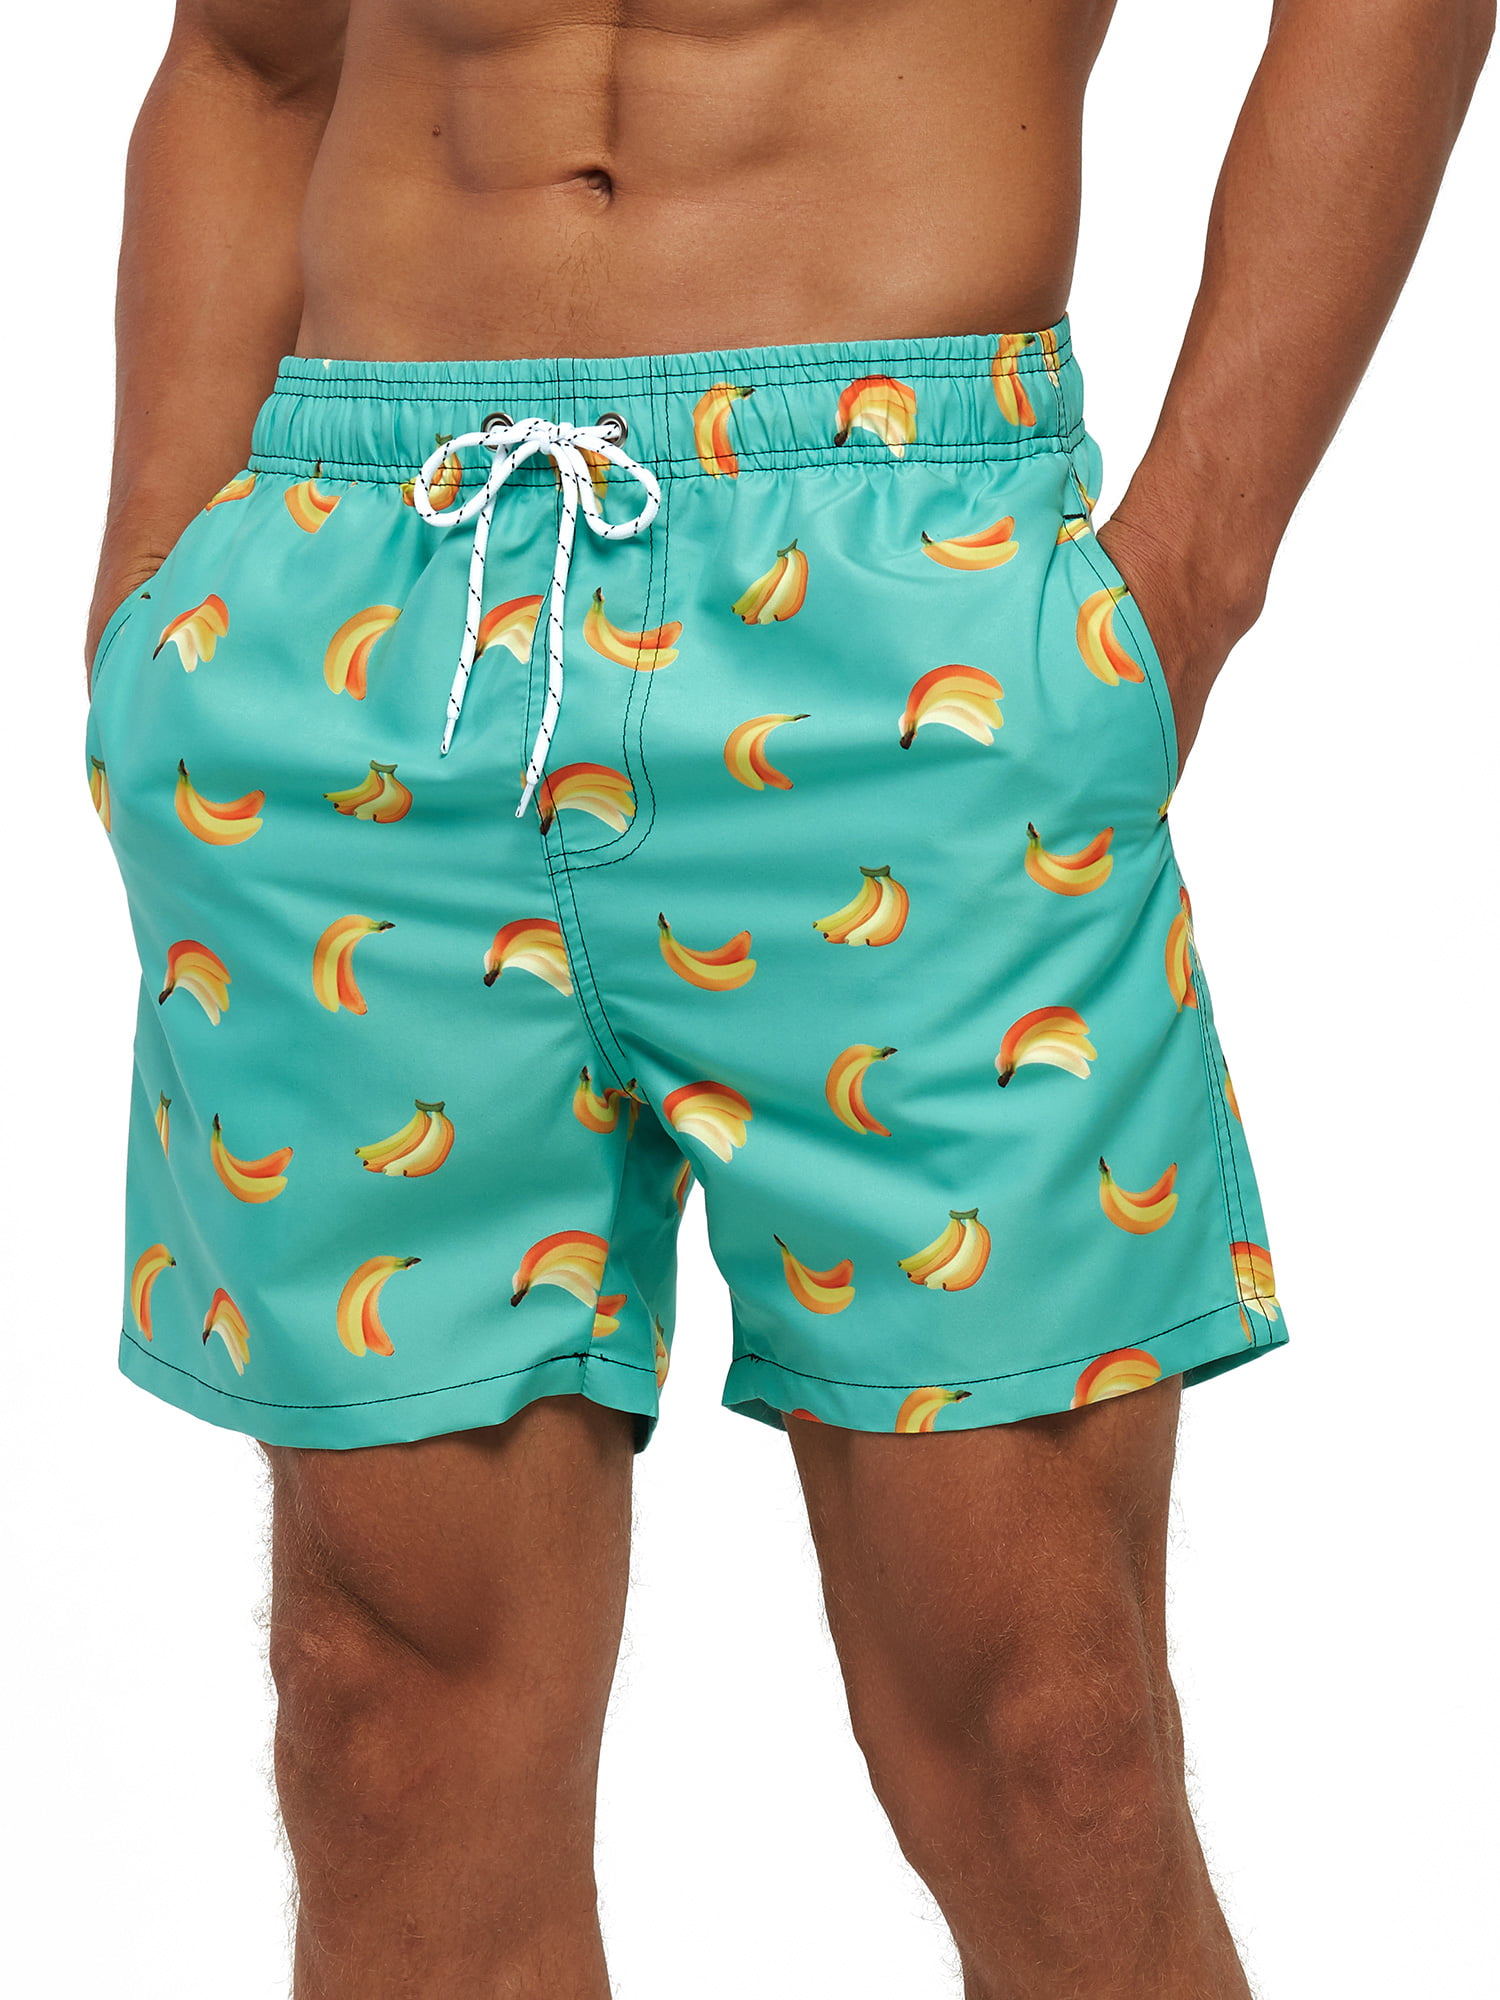 Lavnis Mens Board Shorts Summer Beachwear Quick Dry Swim Trunks Casual Drawstring Waist Shorts 